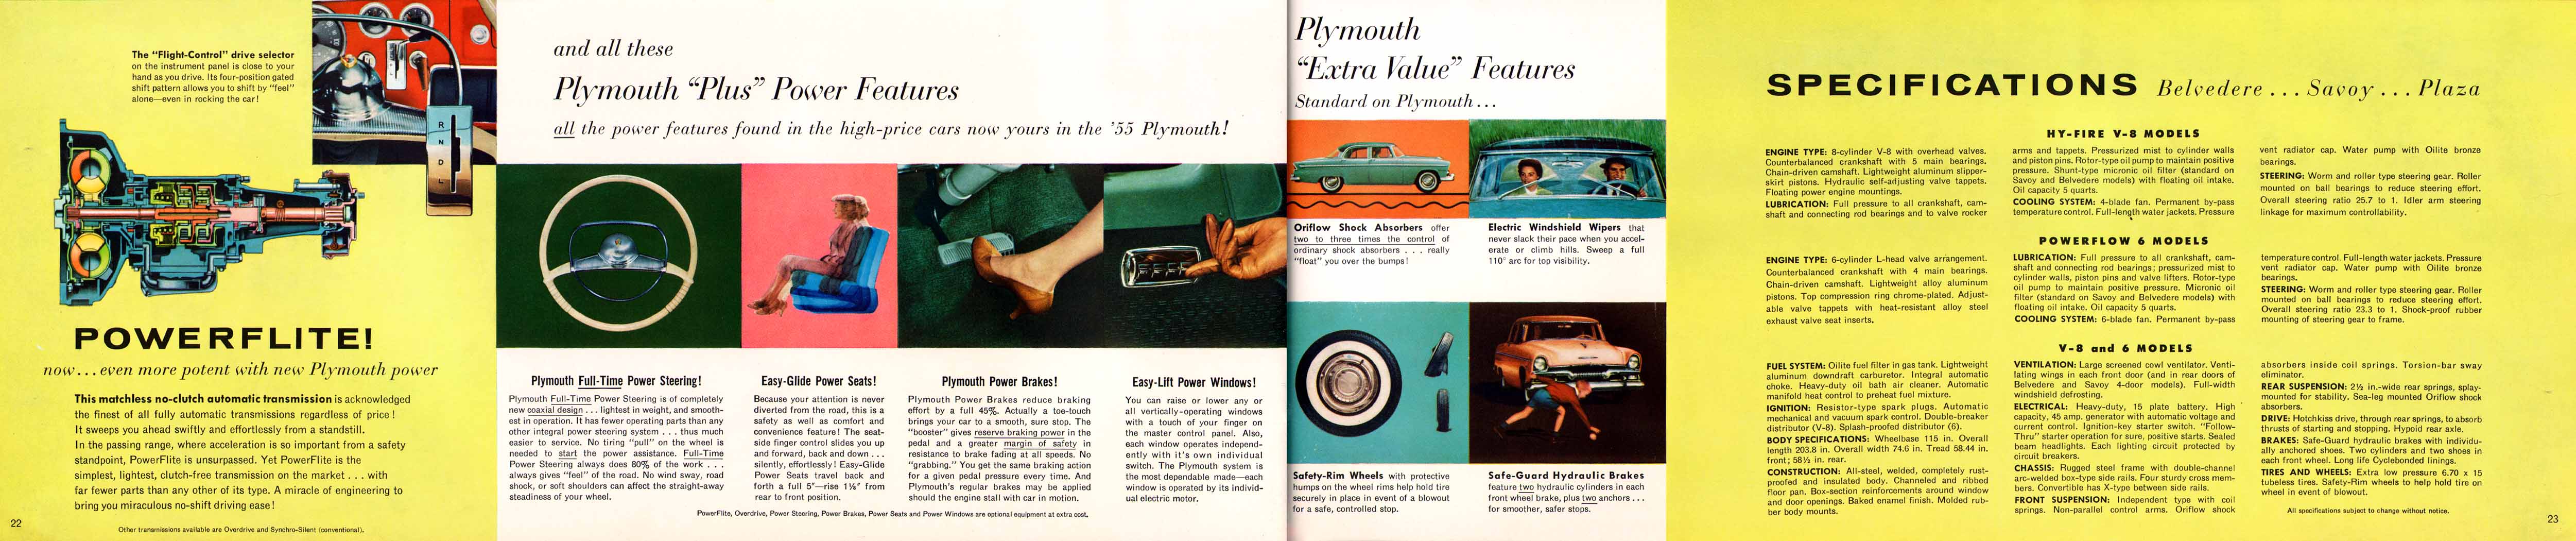 1955_Plymouth_Prestige-22-23